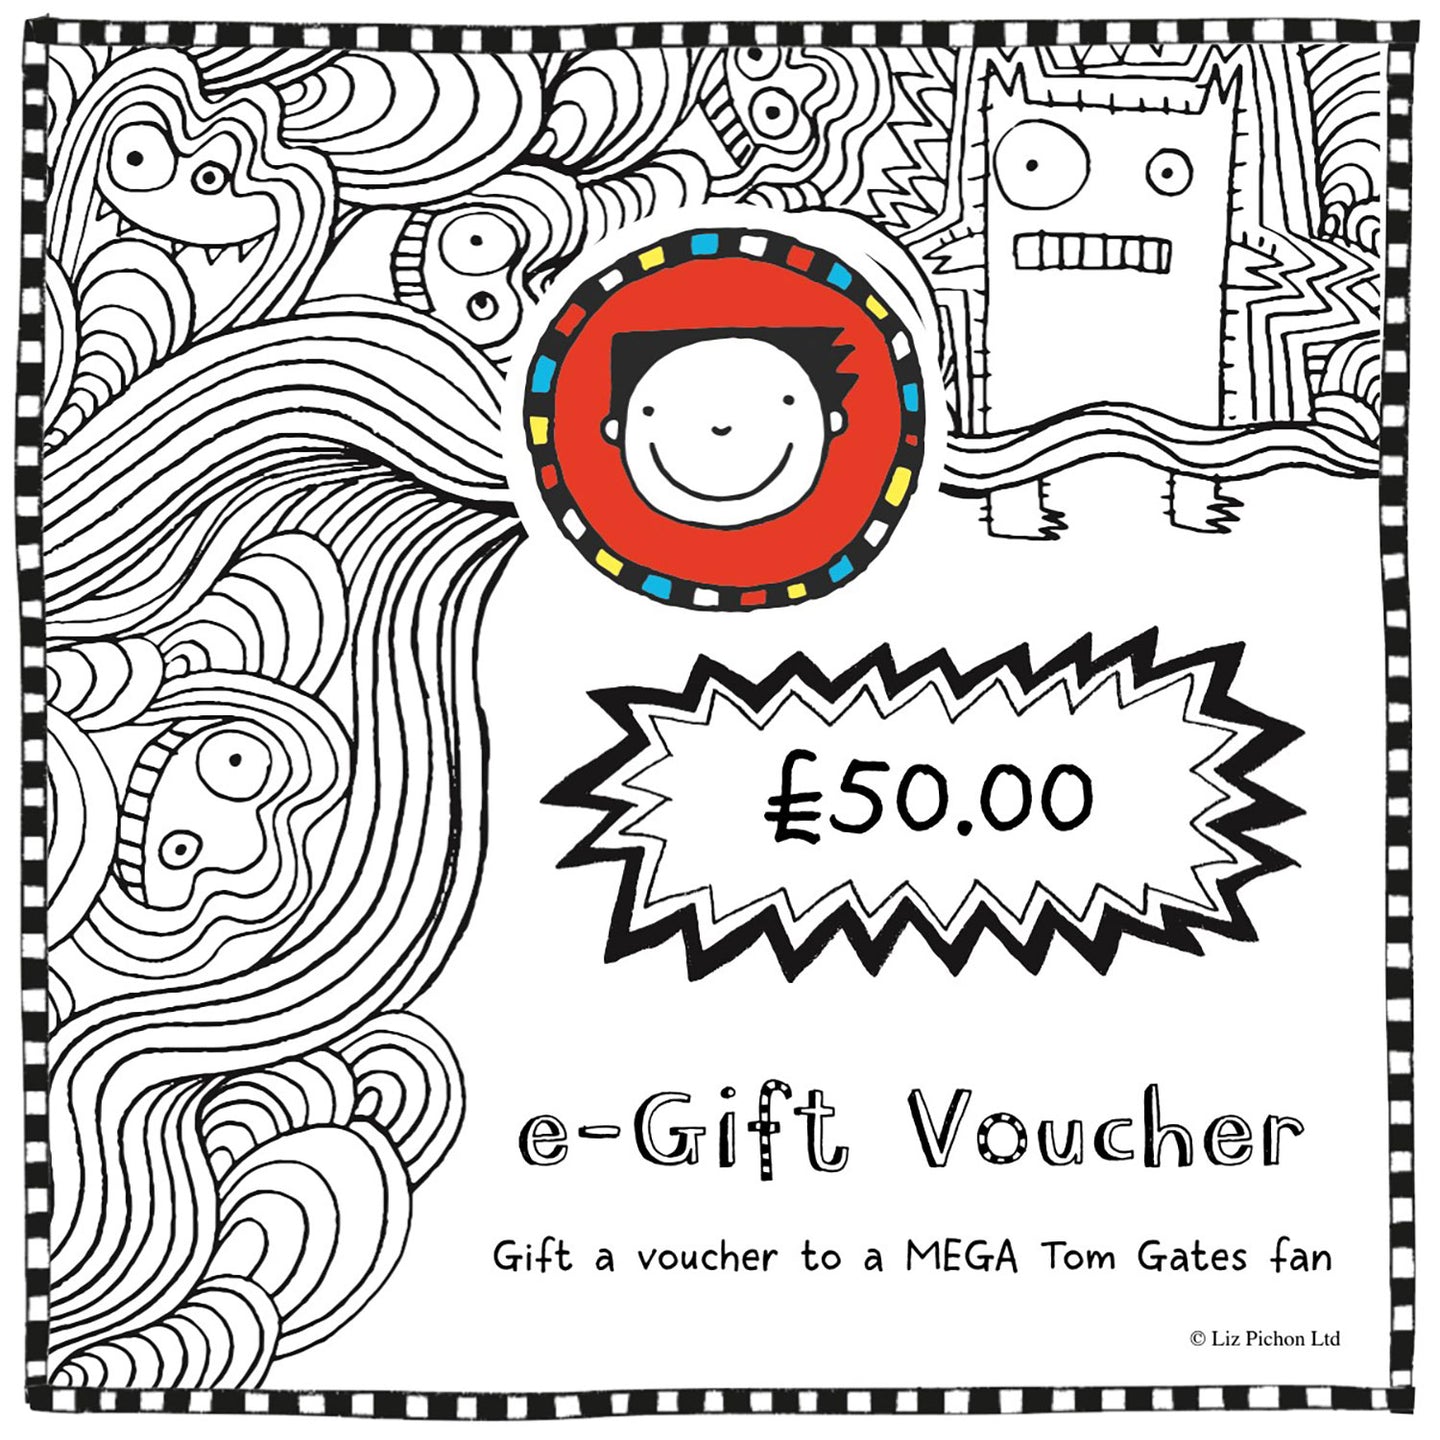 £50 e-Gift Voucher